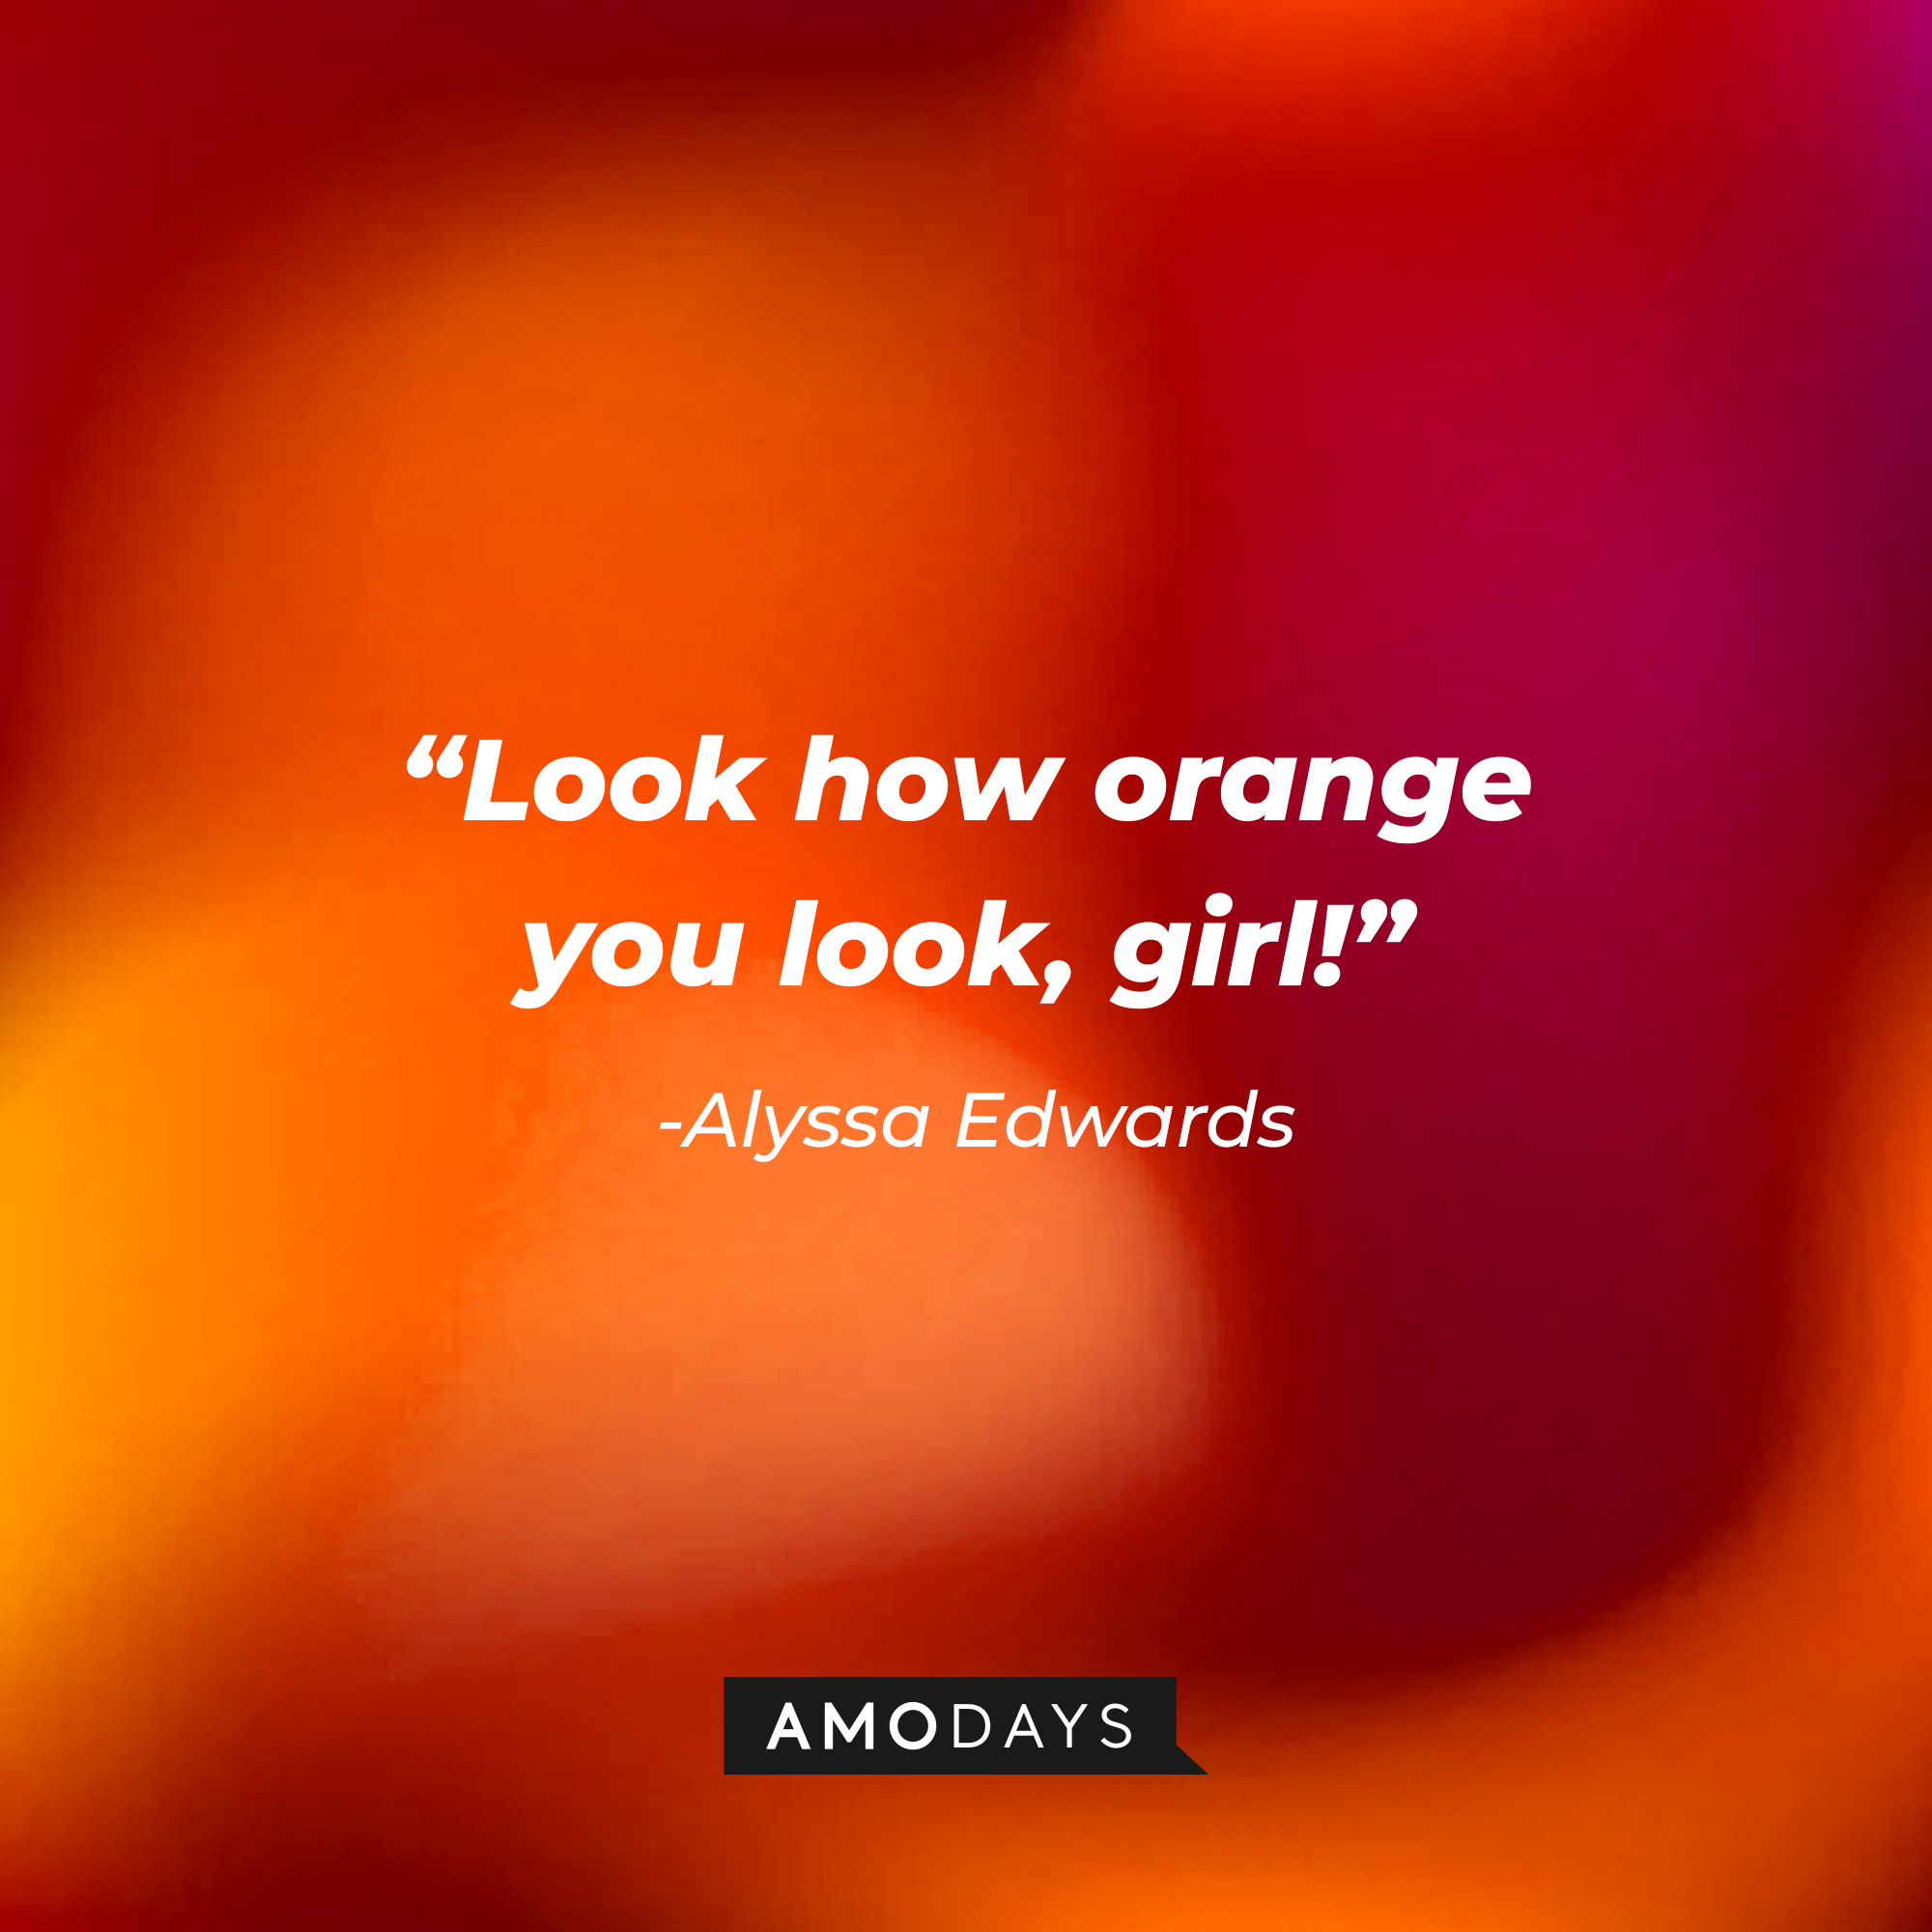 Alyssa Edwards’ quote: "Look how orange you look, girl!" |  Source: AmoDays